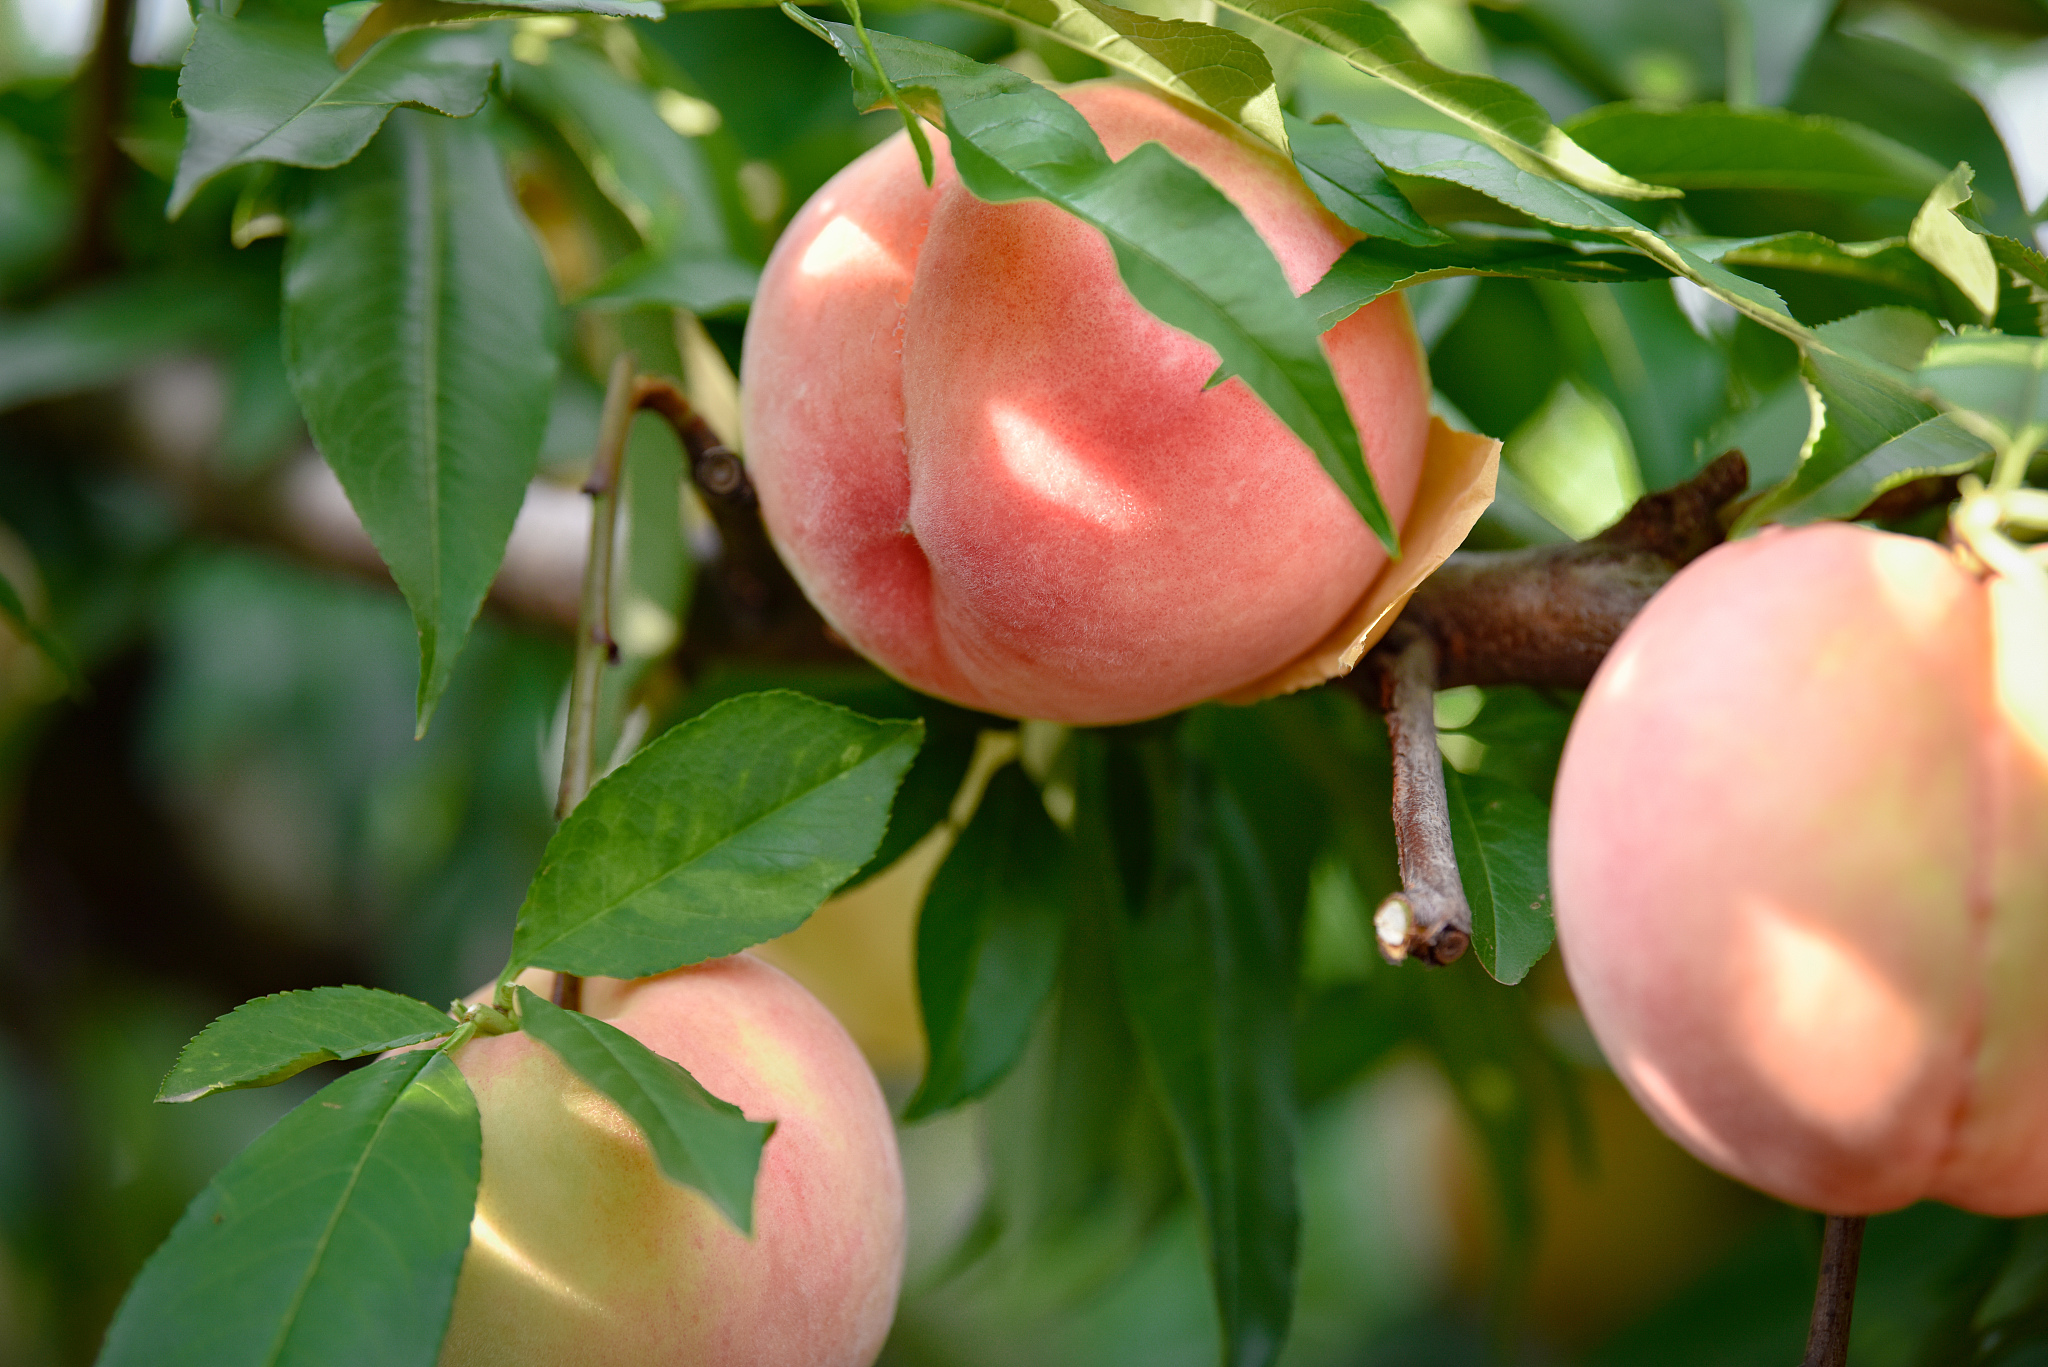 Explore Wuxi: Celebrate summer with Yangshan honey peaches